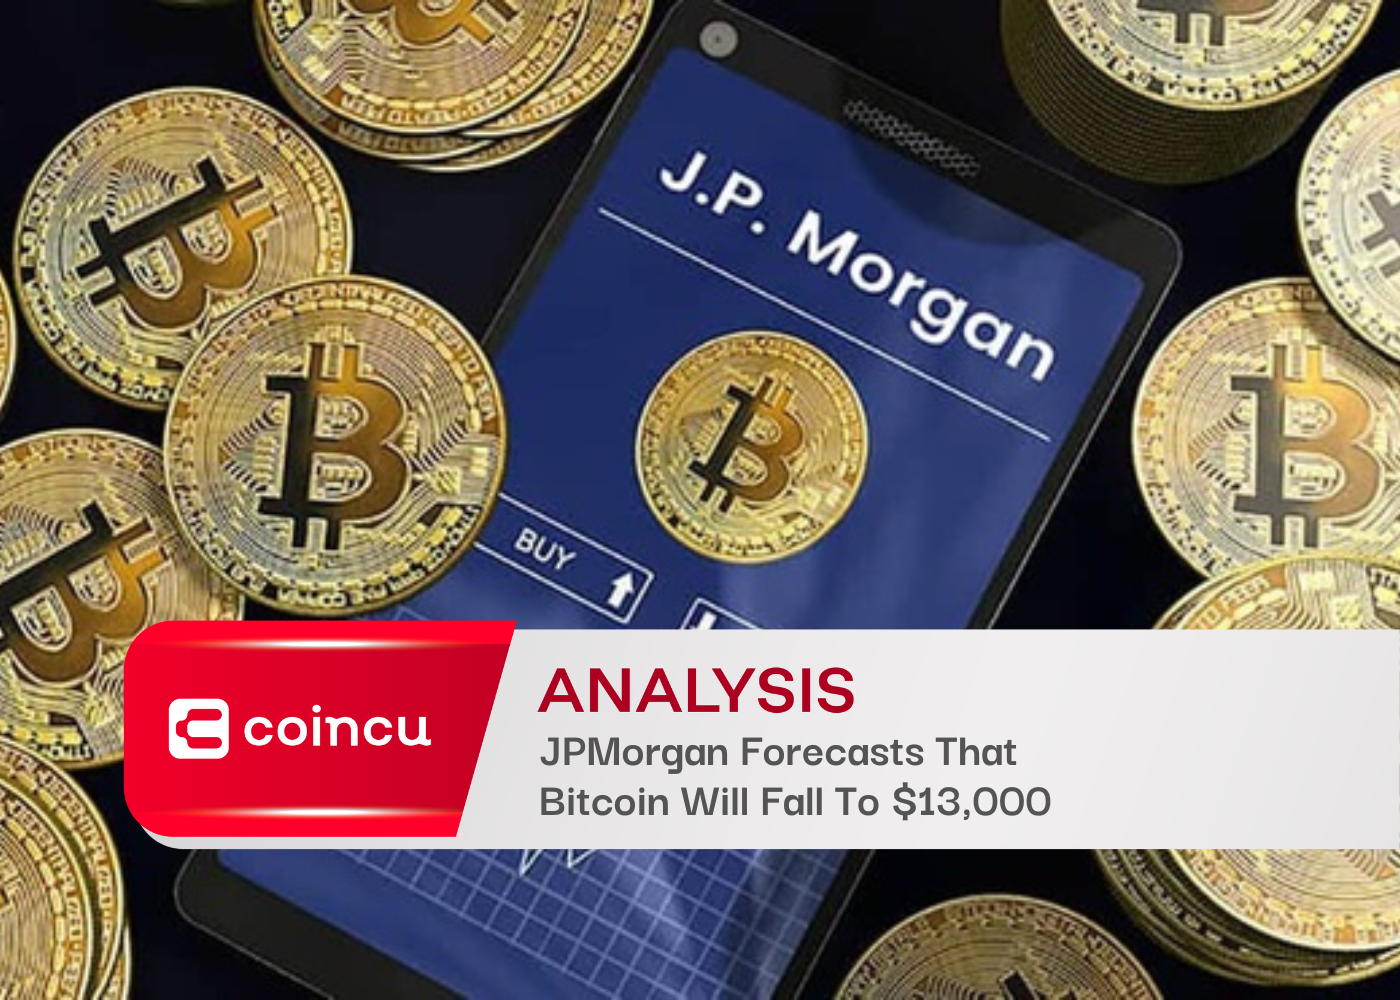 JPMorgan Forecasts That